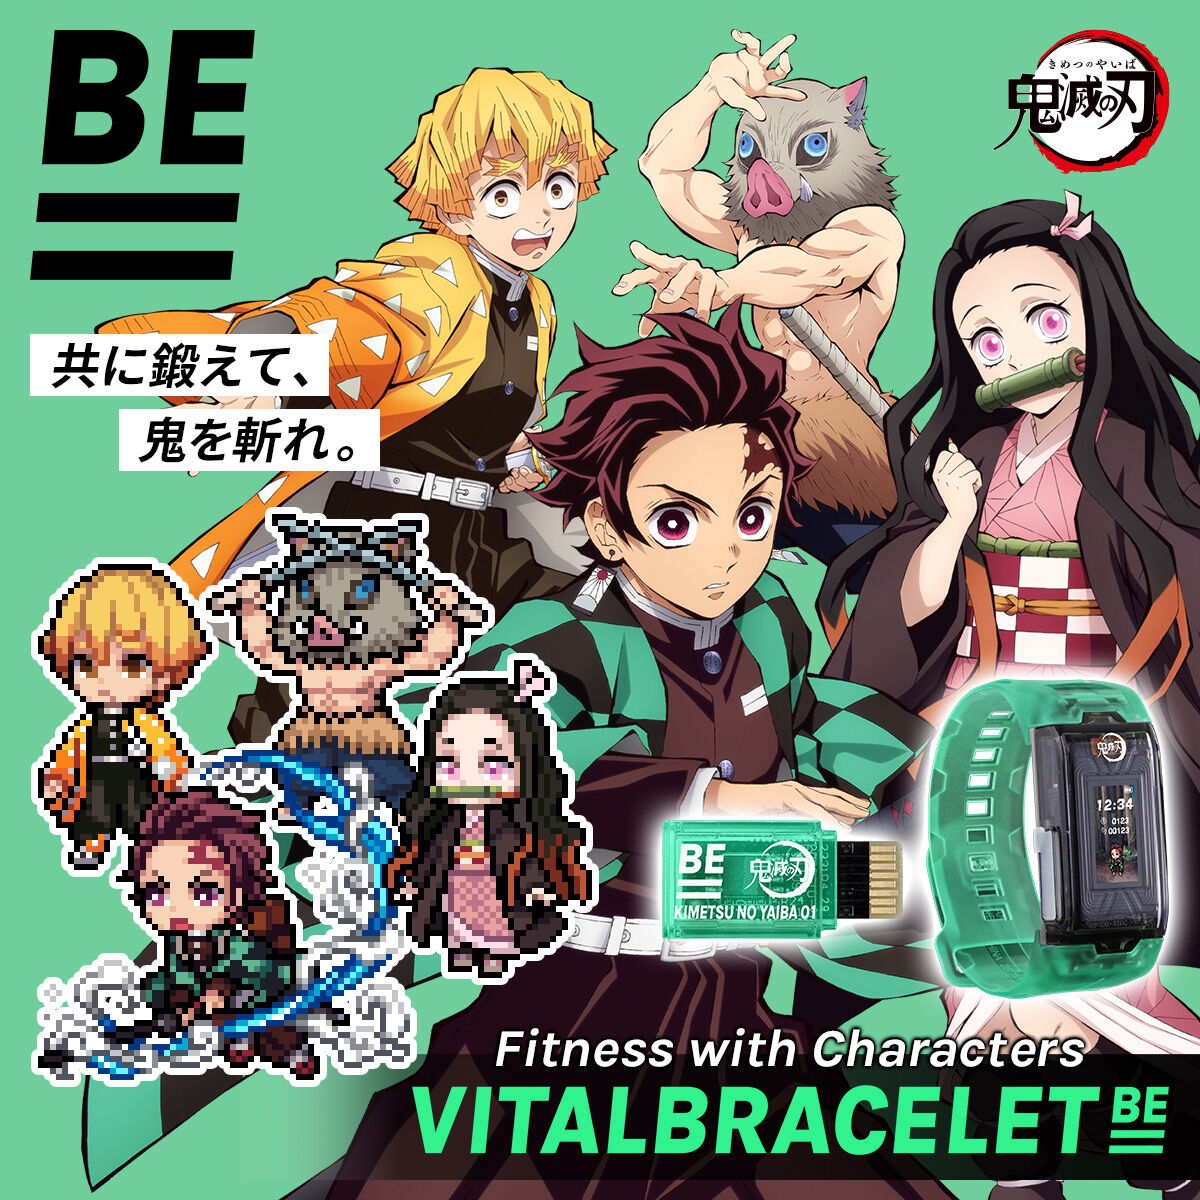 Vital Bracelet Be 鬼滅の刃 Special Set 鬼滅の刃 おもちゃ キャラクター玩具 バンダイナムコグループ公式通販サイト